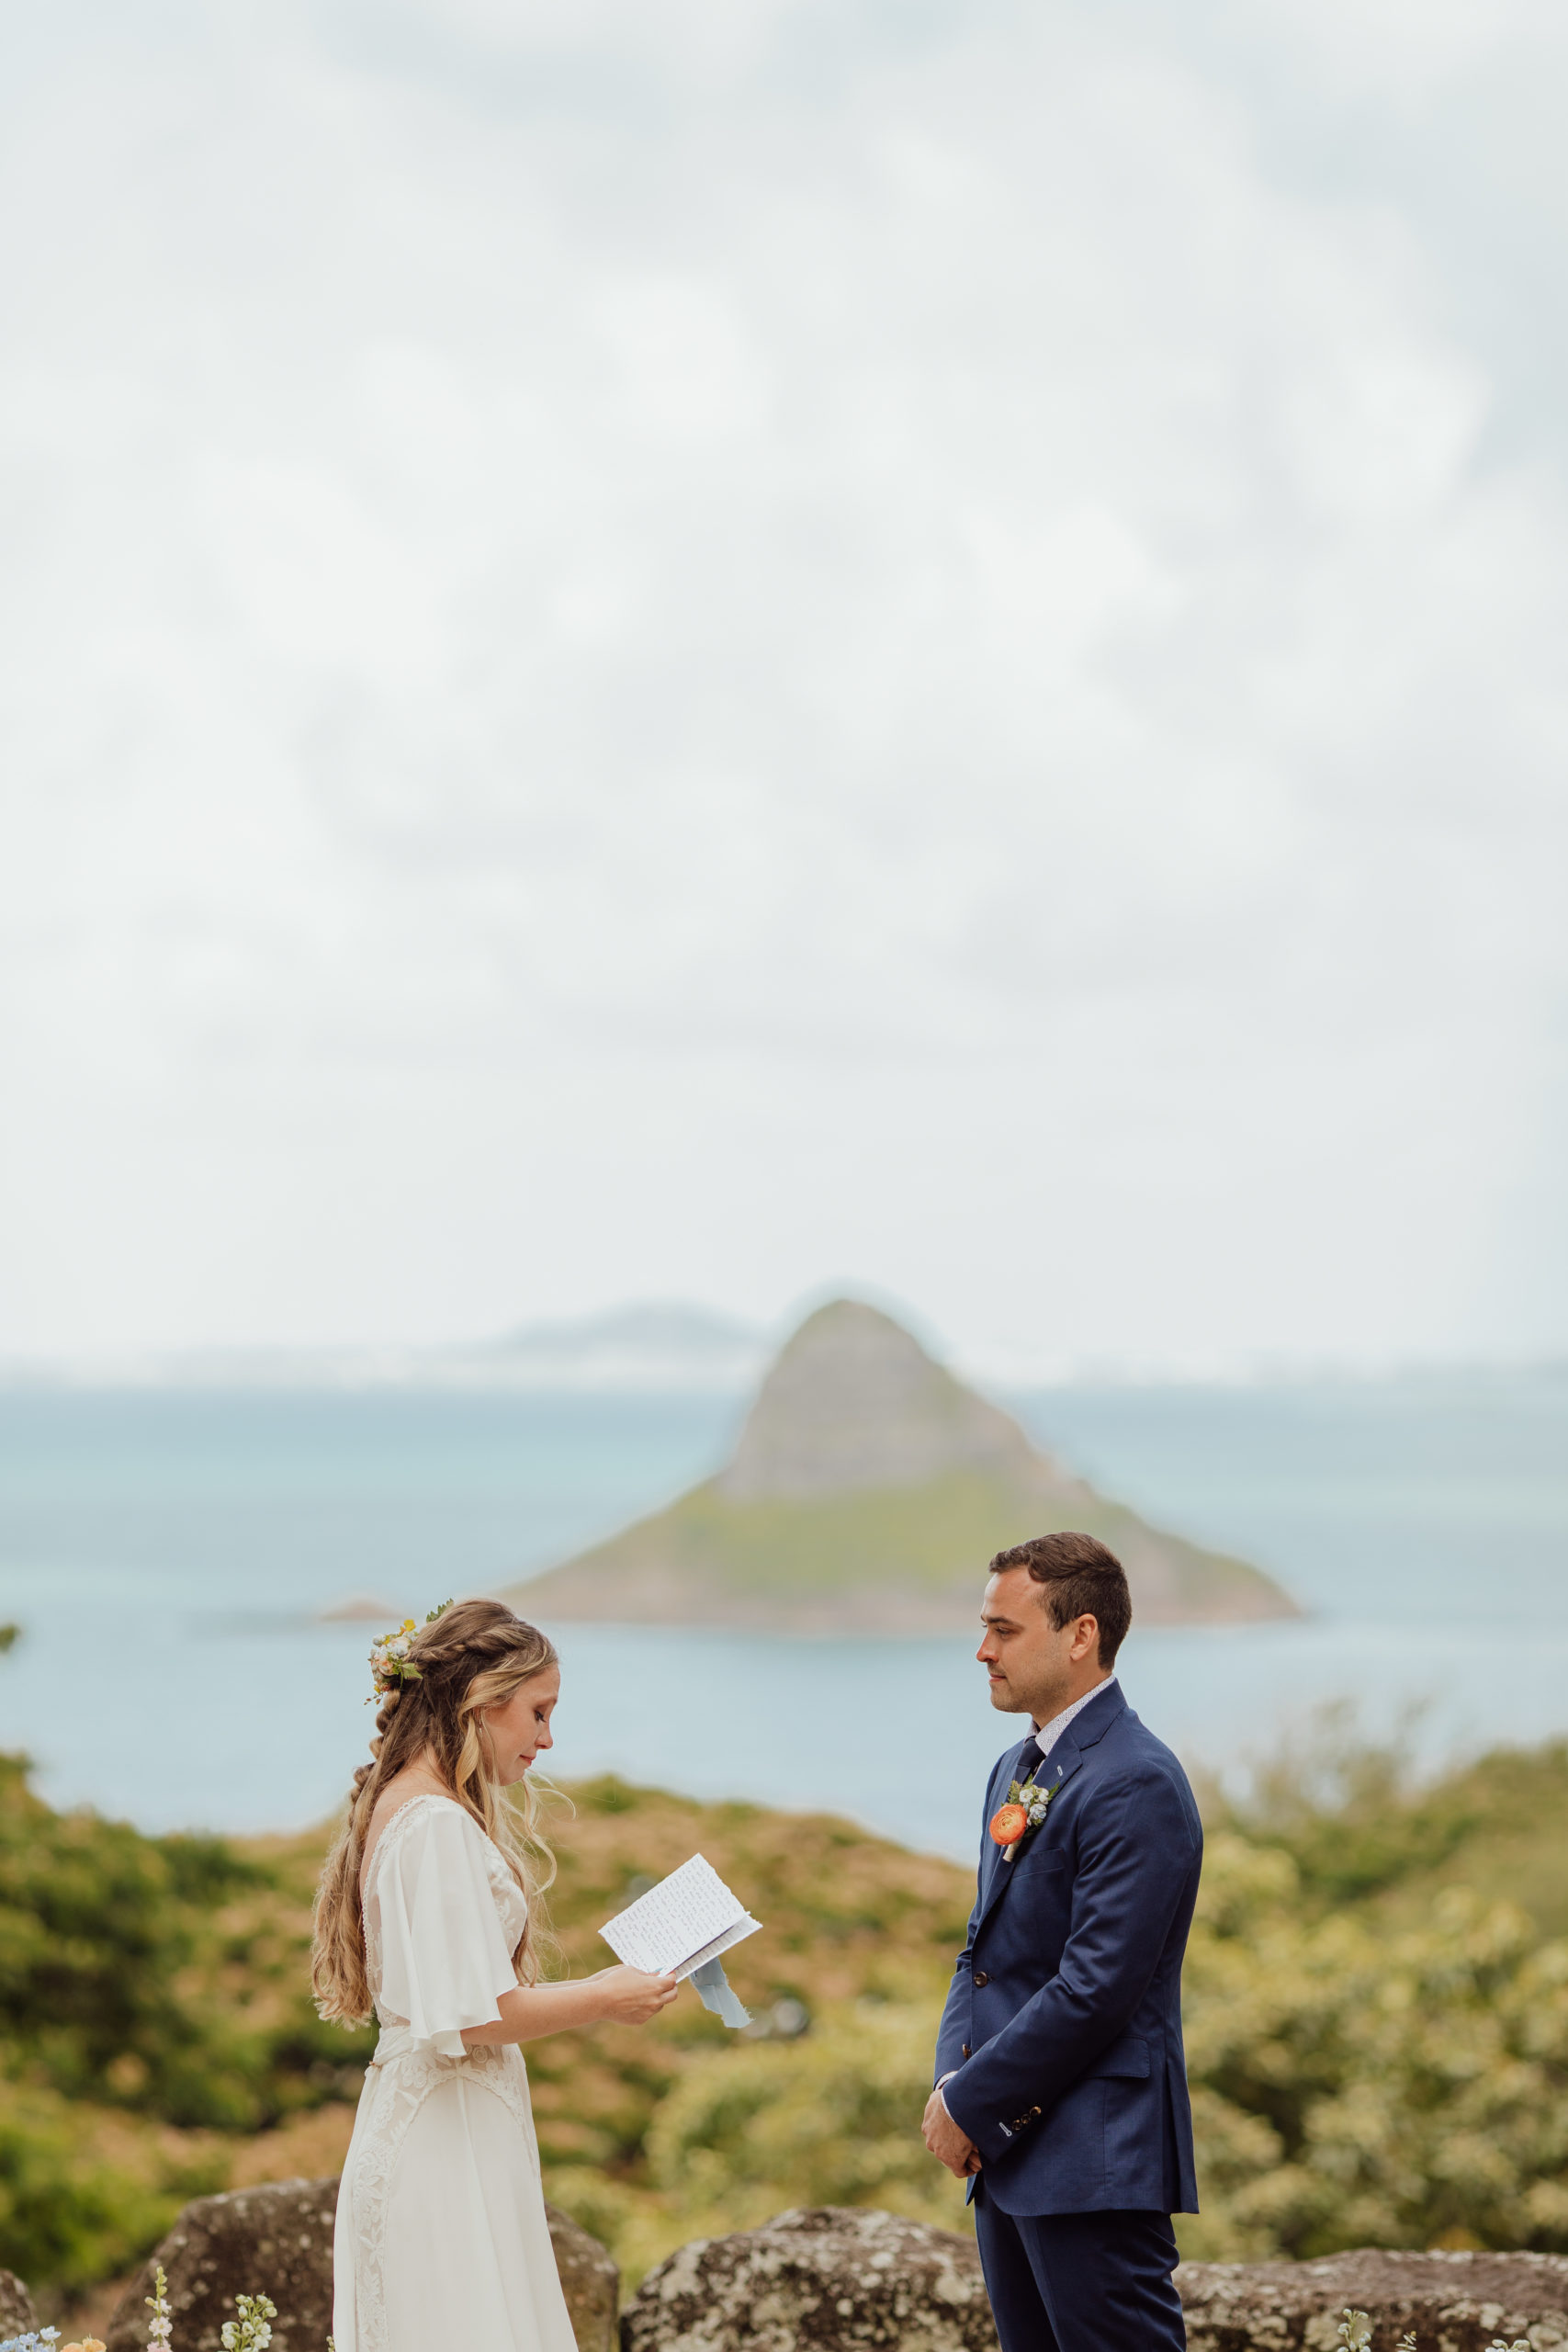 tropical wedding, destination wedding inspo, Hawaii wedding photographer, bohemian bride inspo, luxury wedding